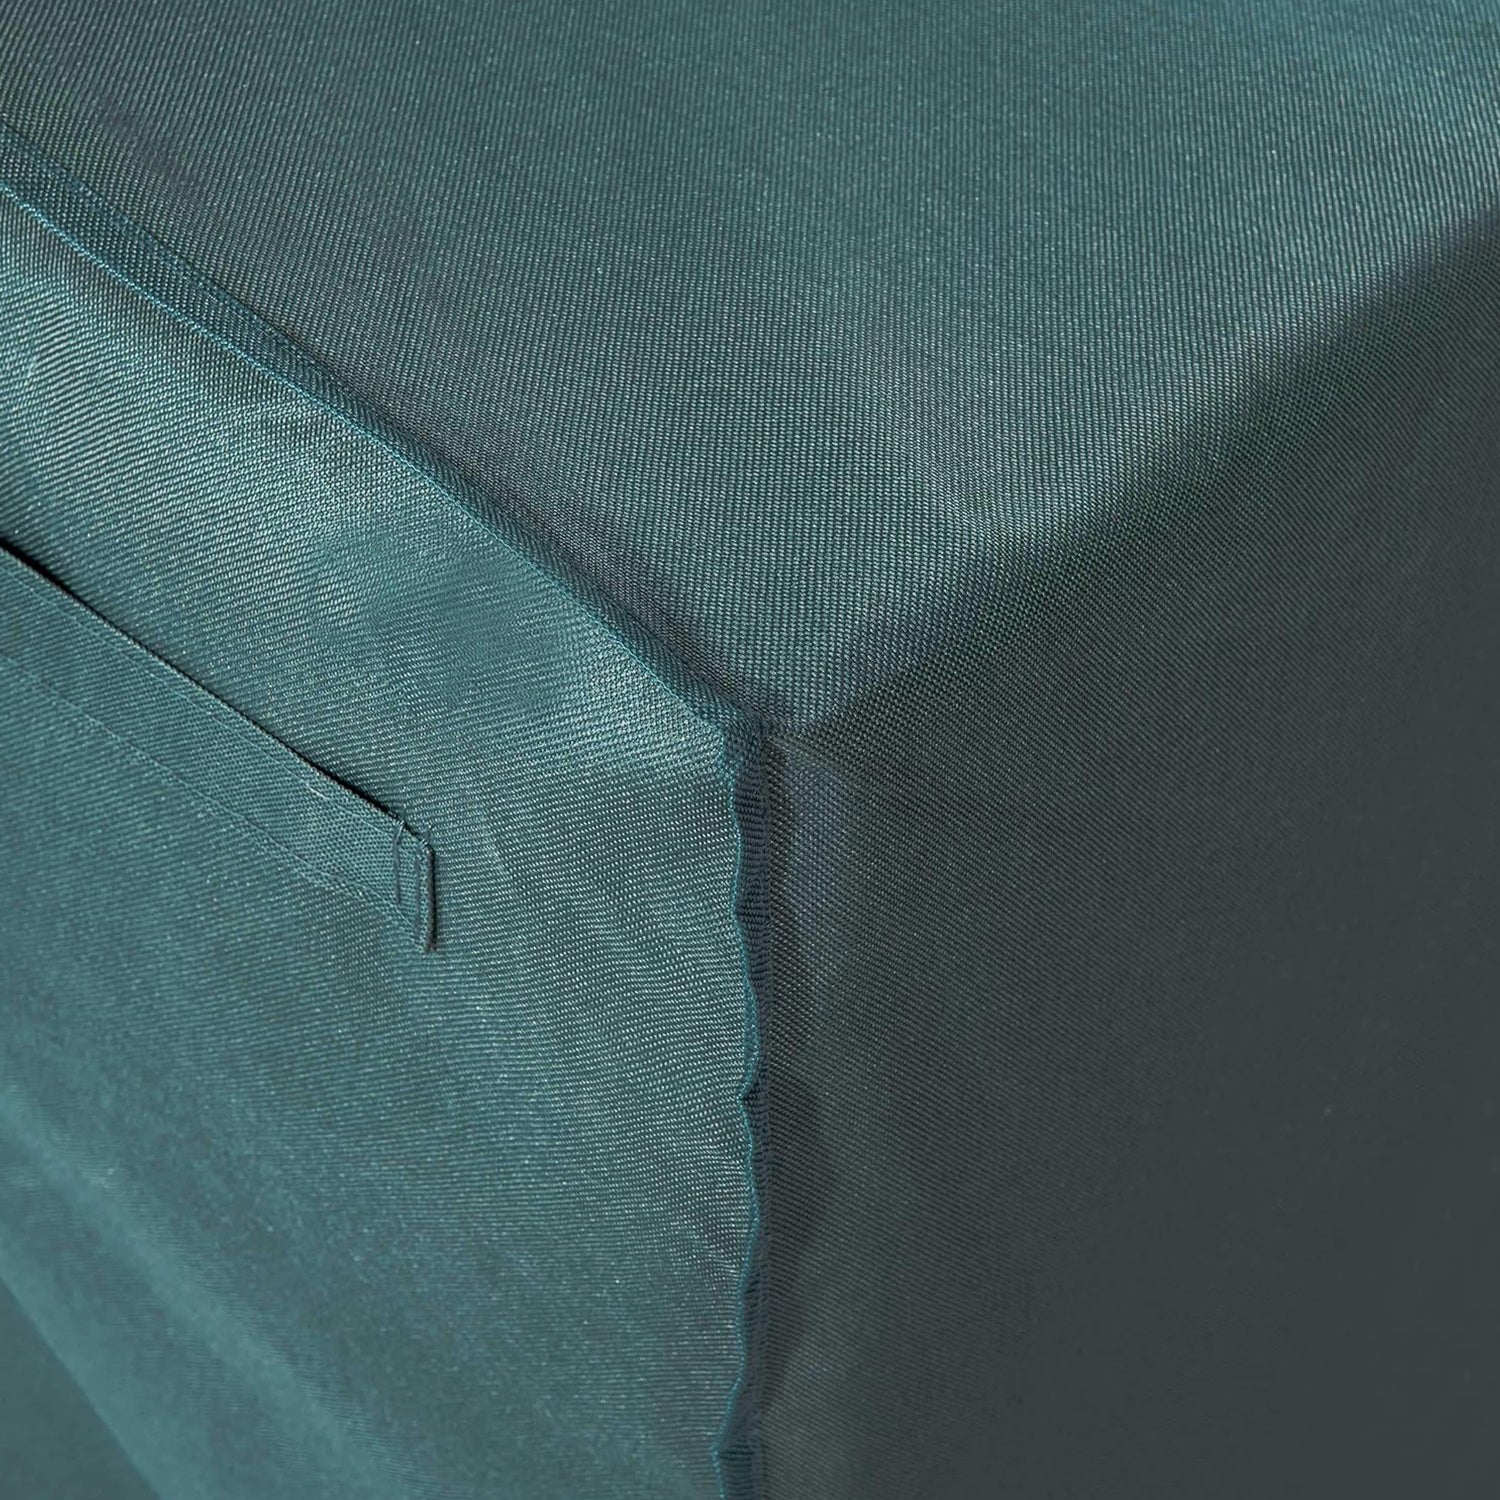 Abdeckung für Patio Stühle - 84,9 x 66,8 x 88,9 cm - Grün/Grau